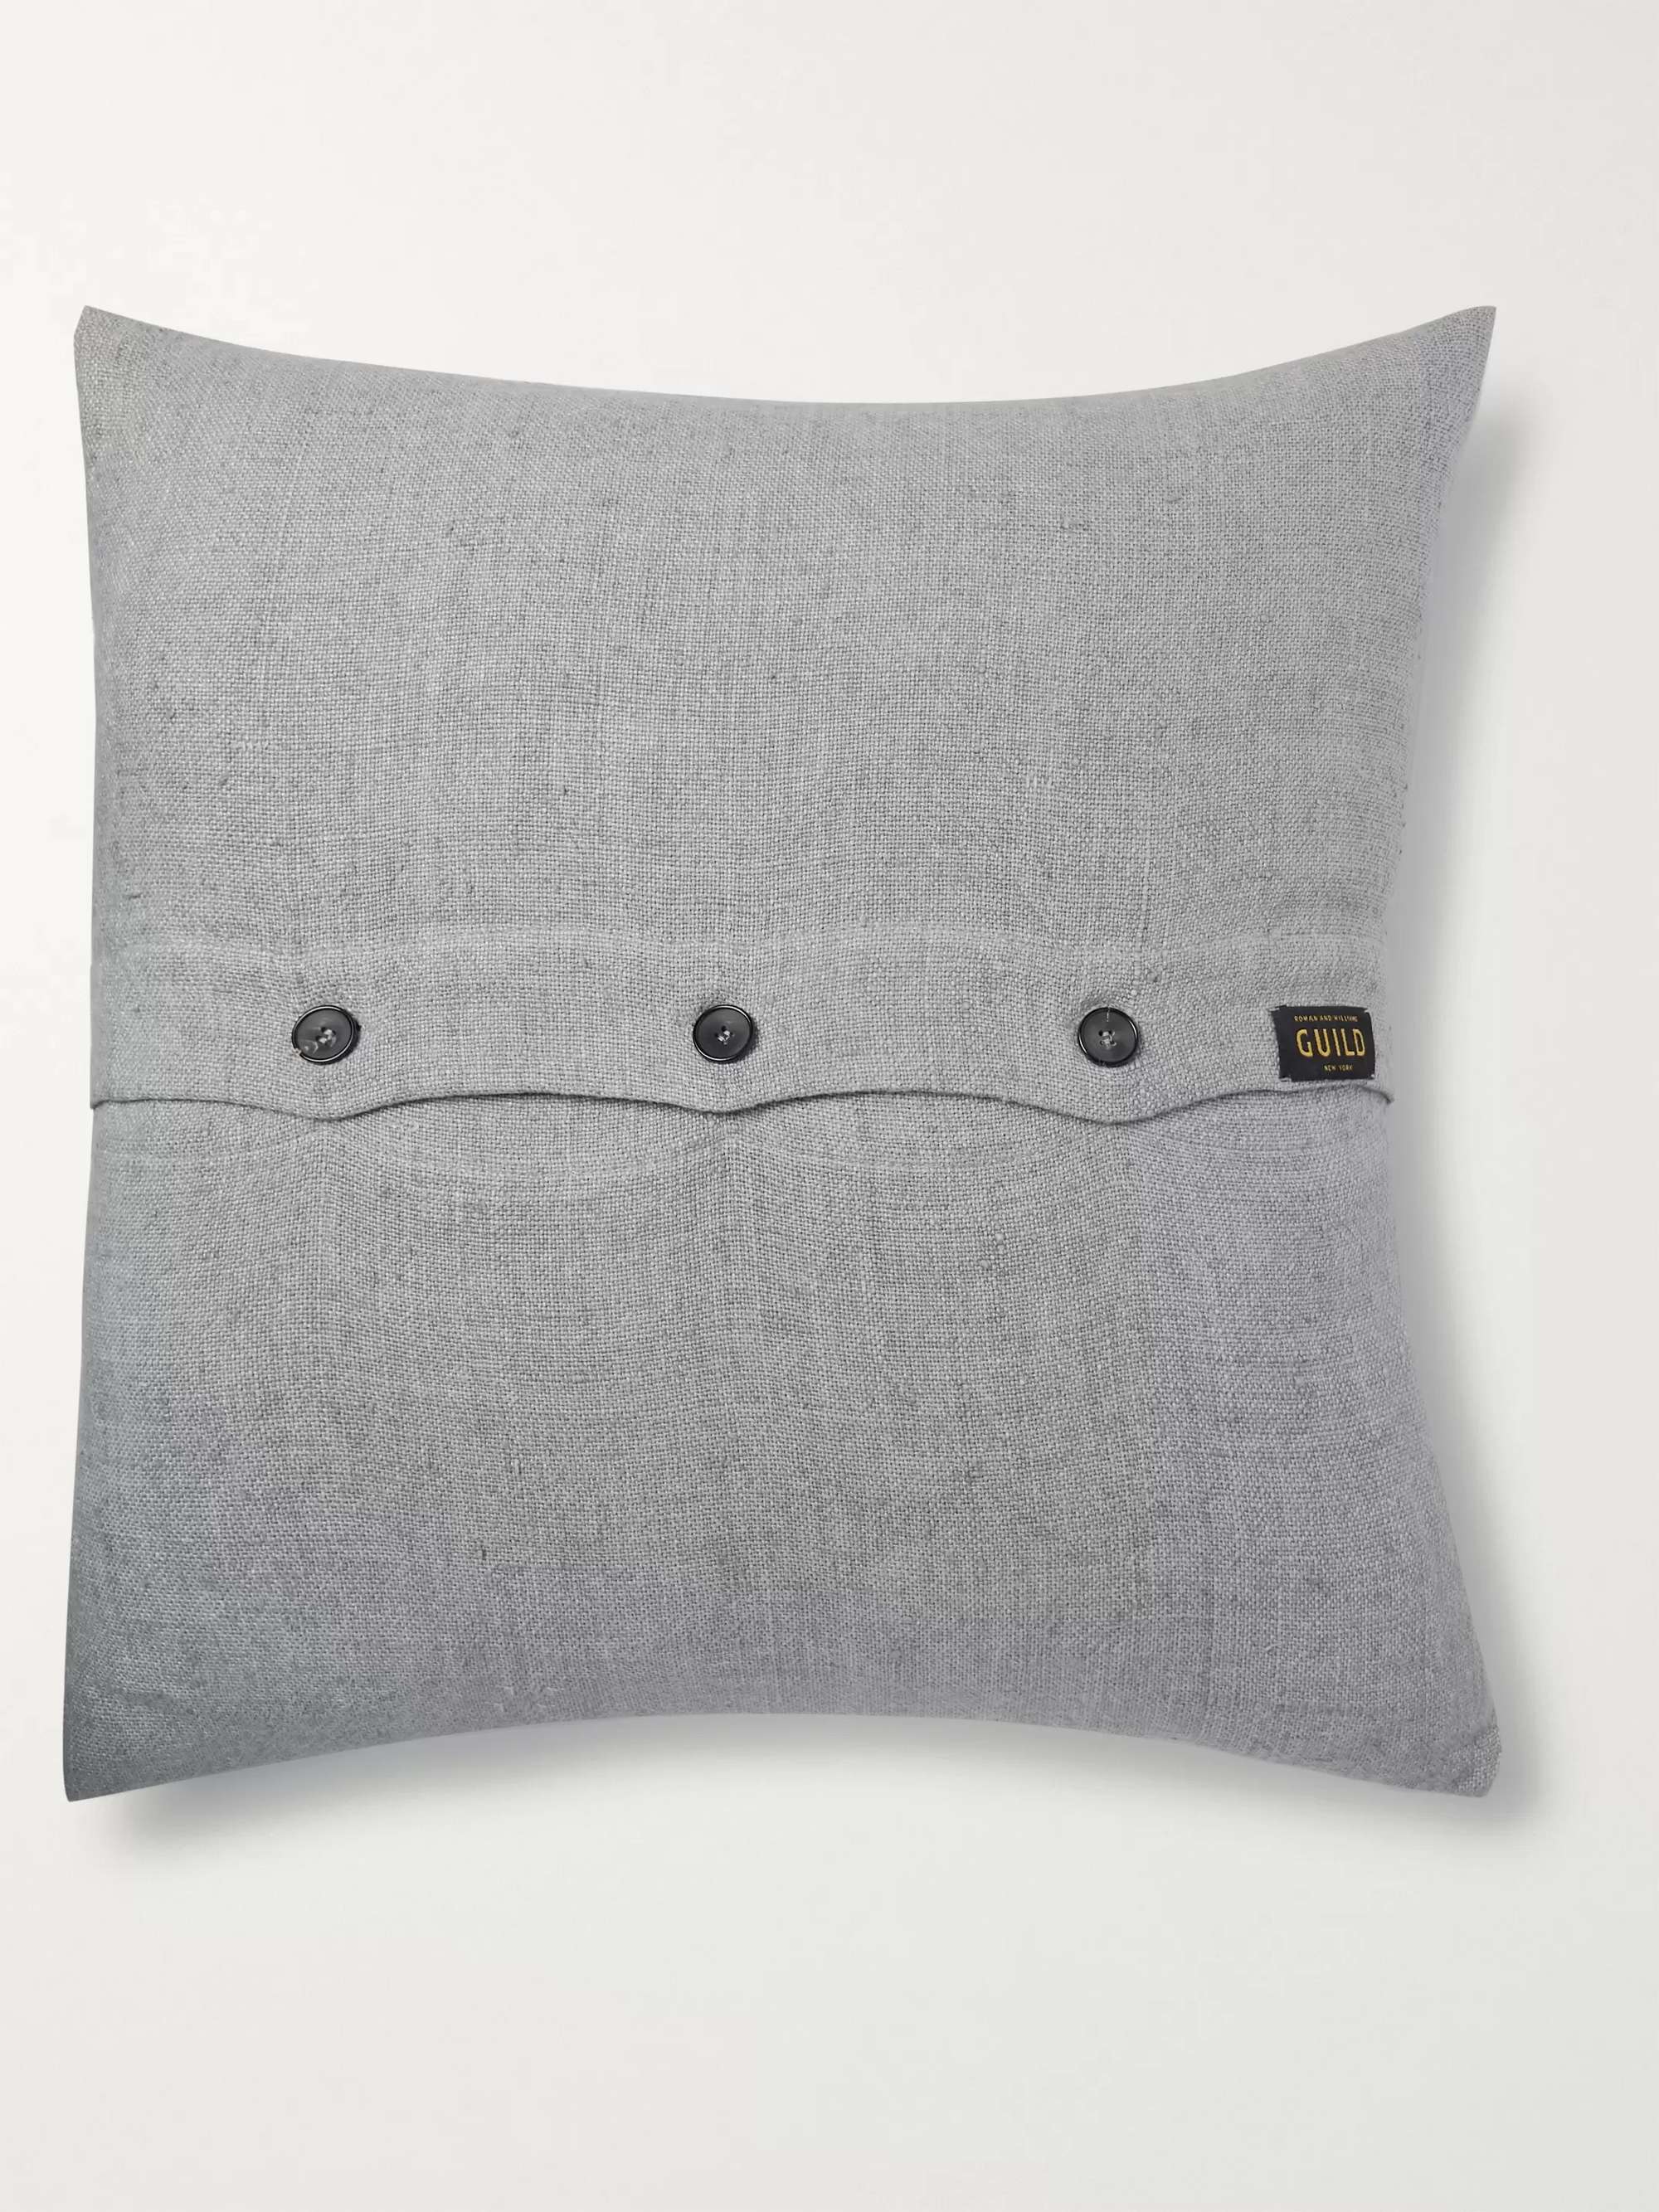 ROMAN & WILLIAMS GUILD Buttoned Linen Cushion Cover